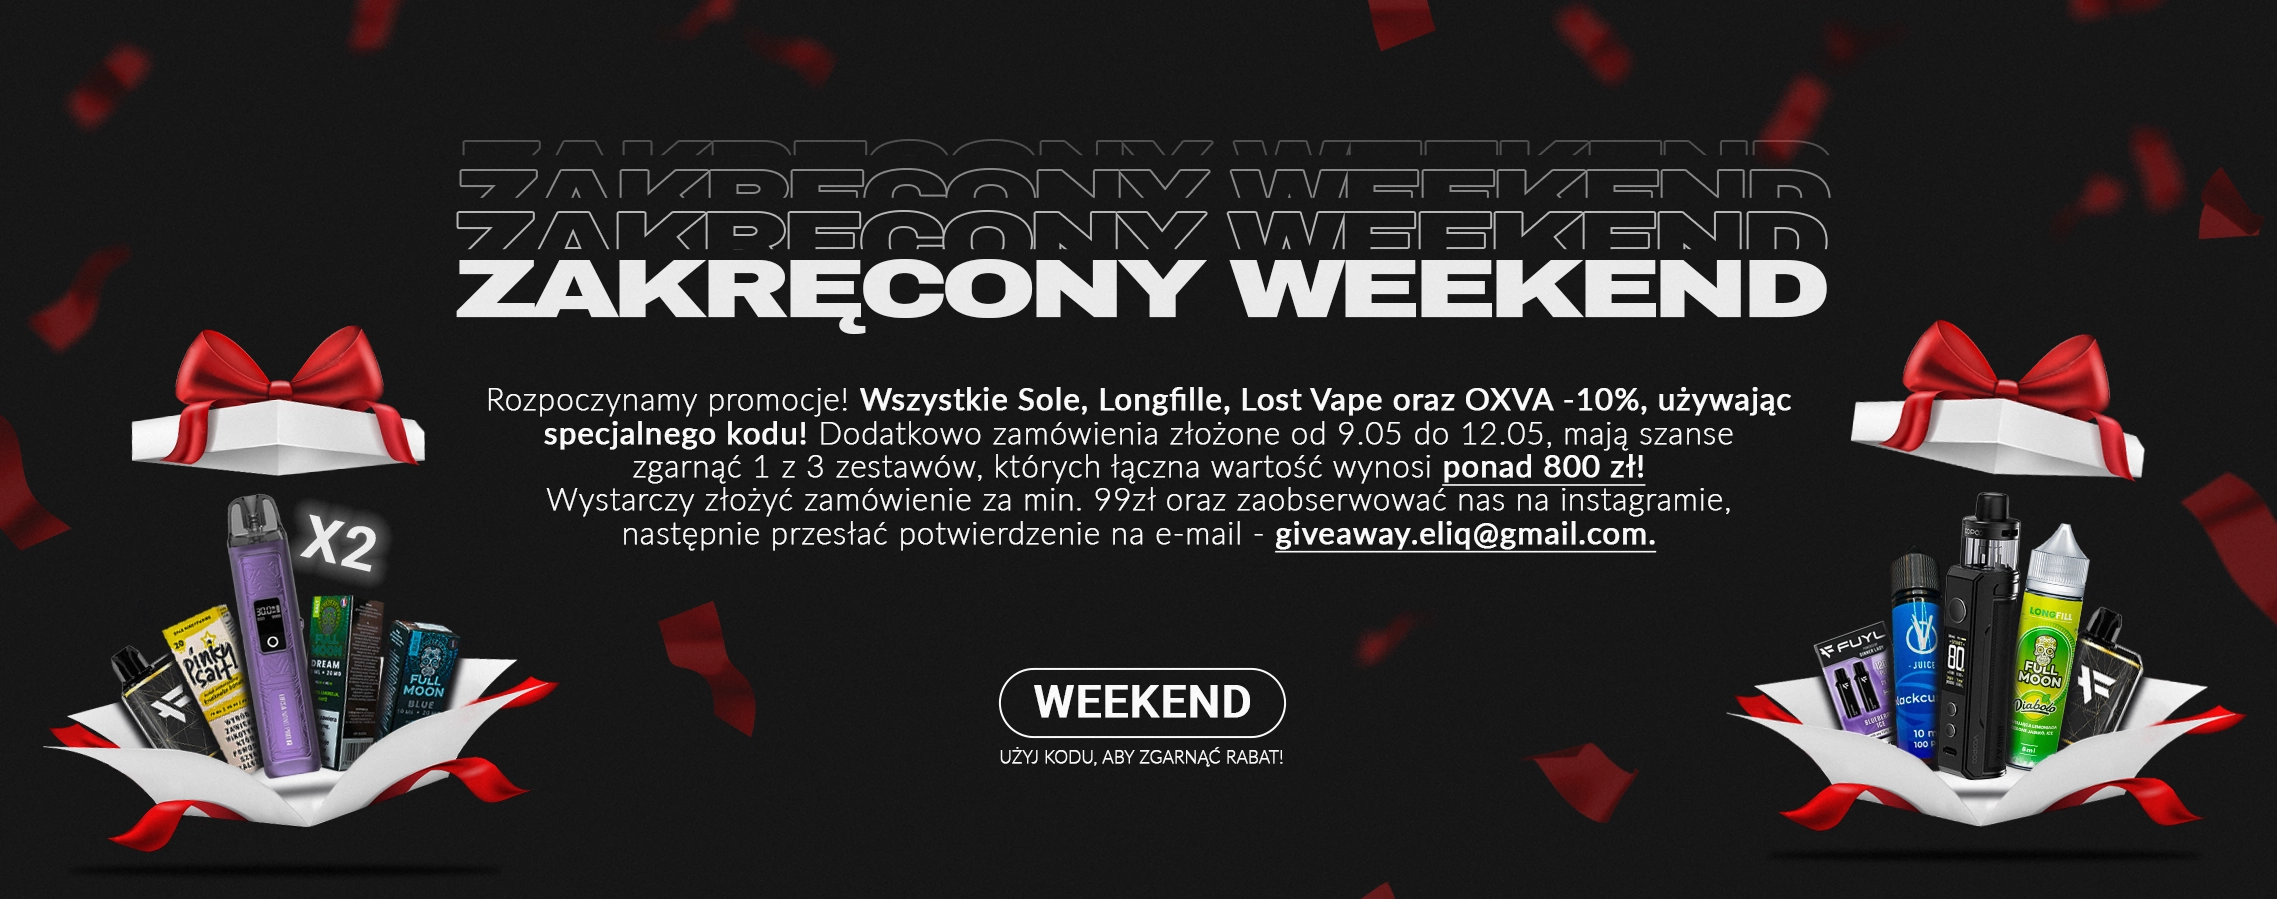 Zakrecony-Weekend-09-05